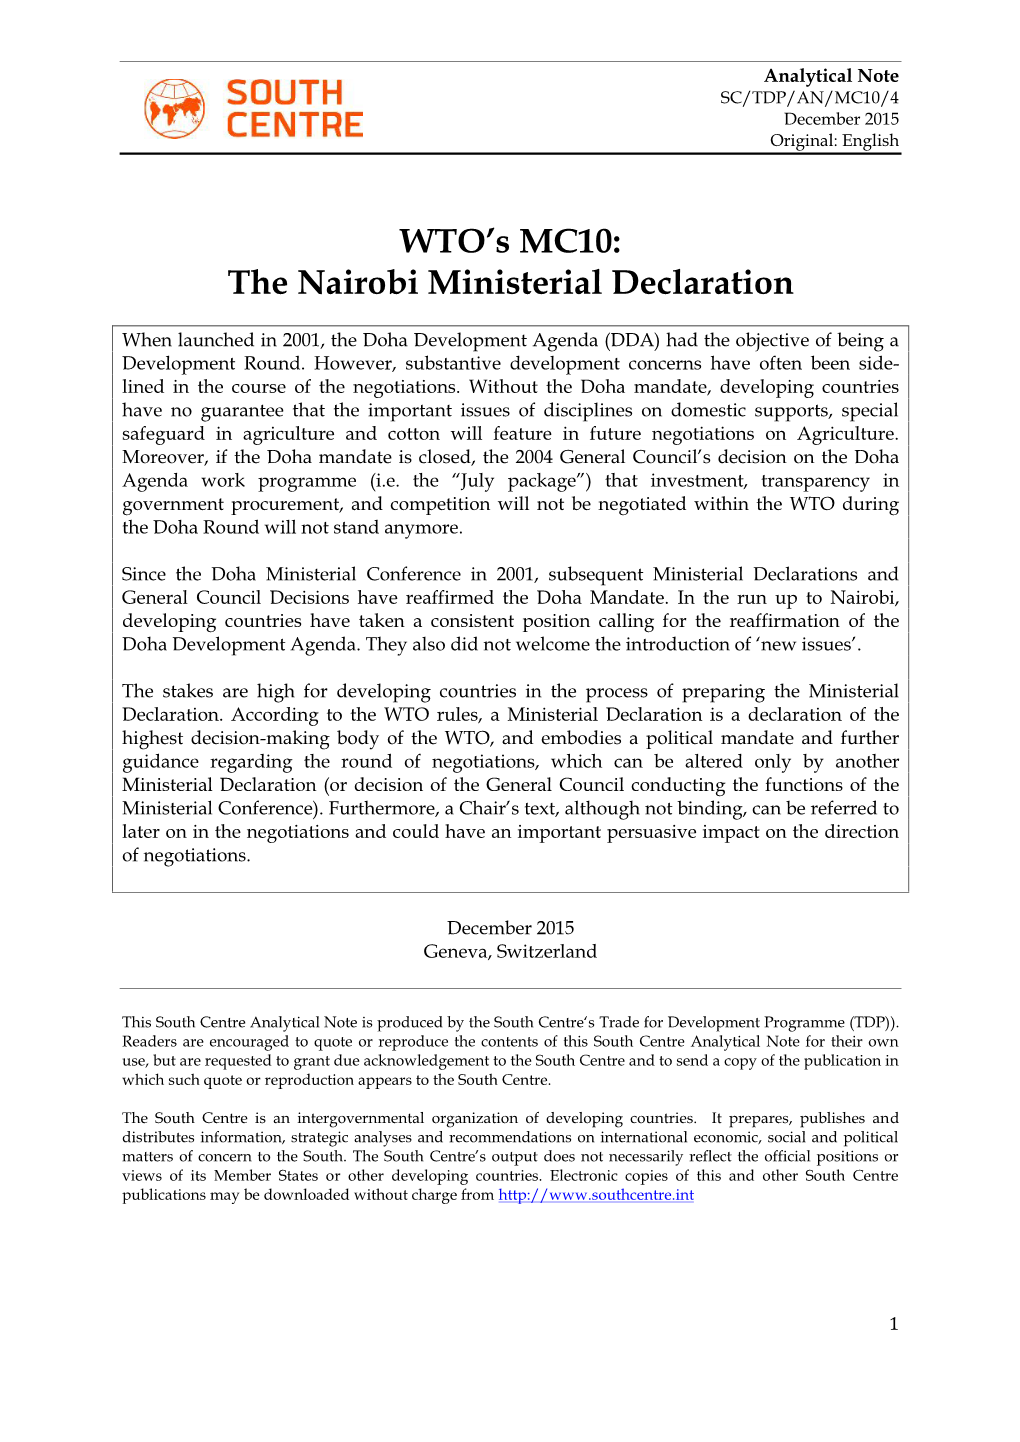 WTO's MC10: the Nairobi Ministerial Declaration